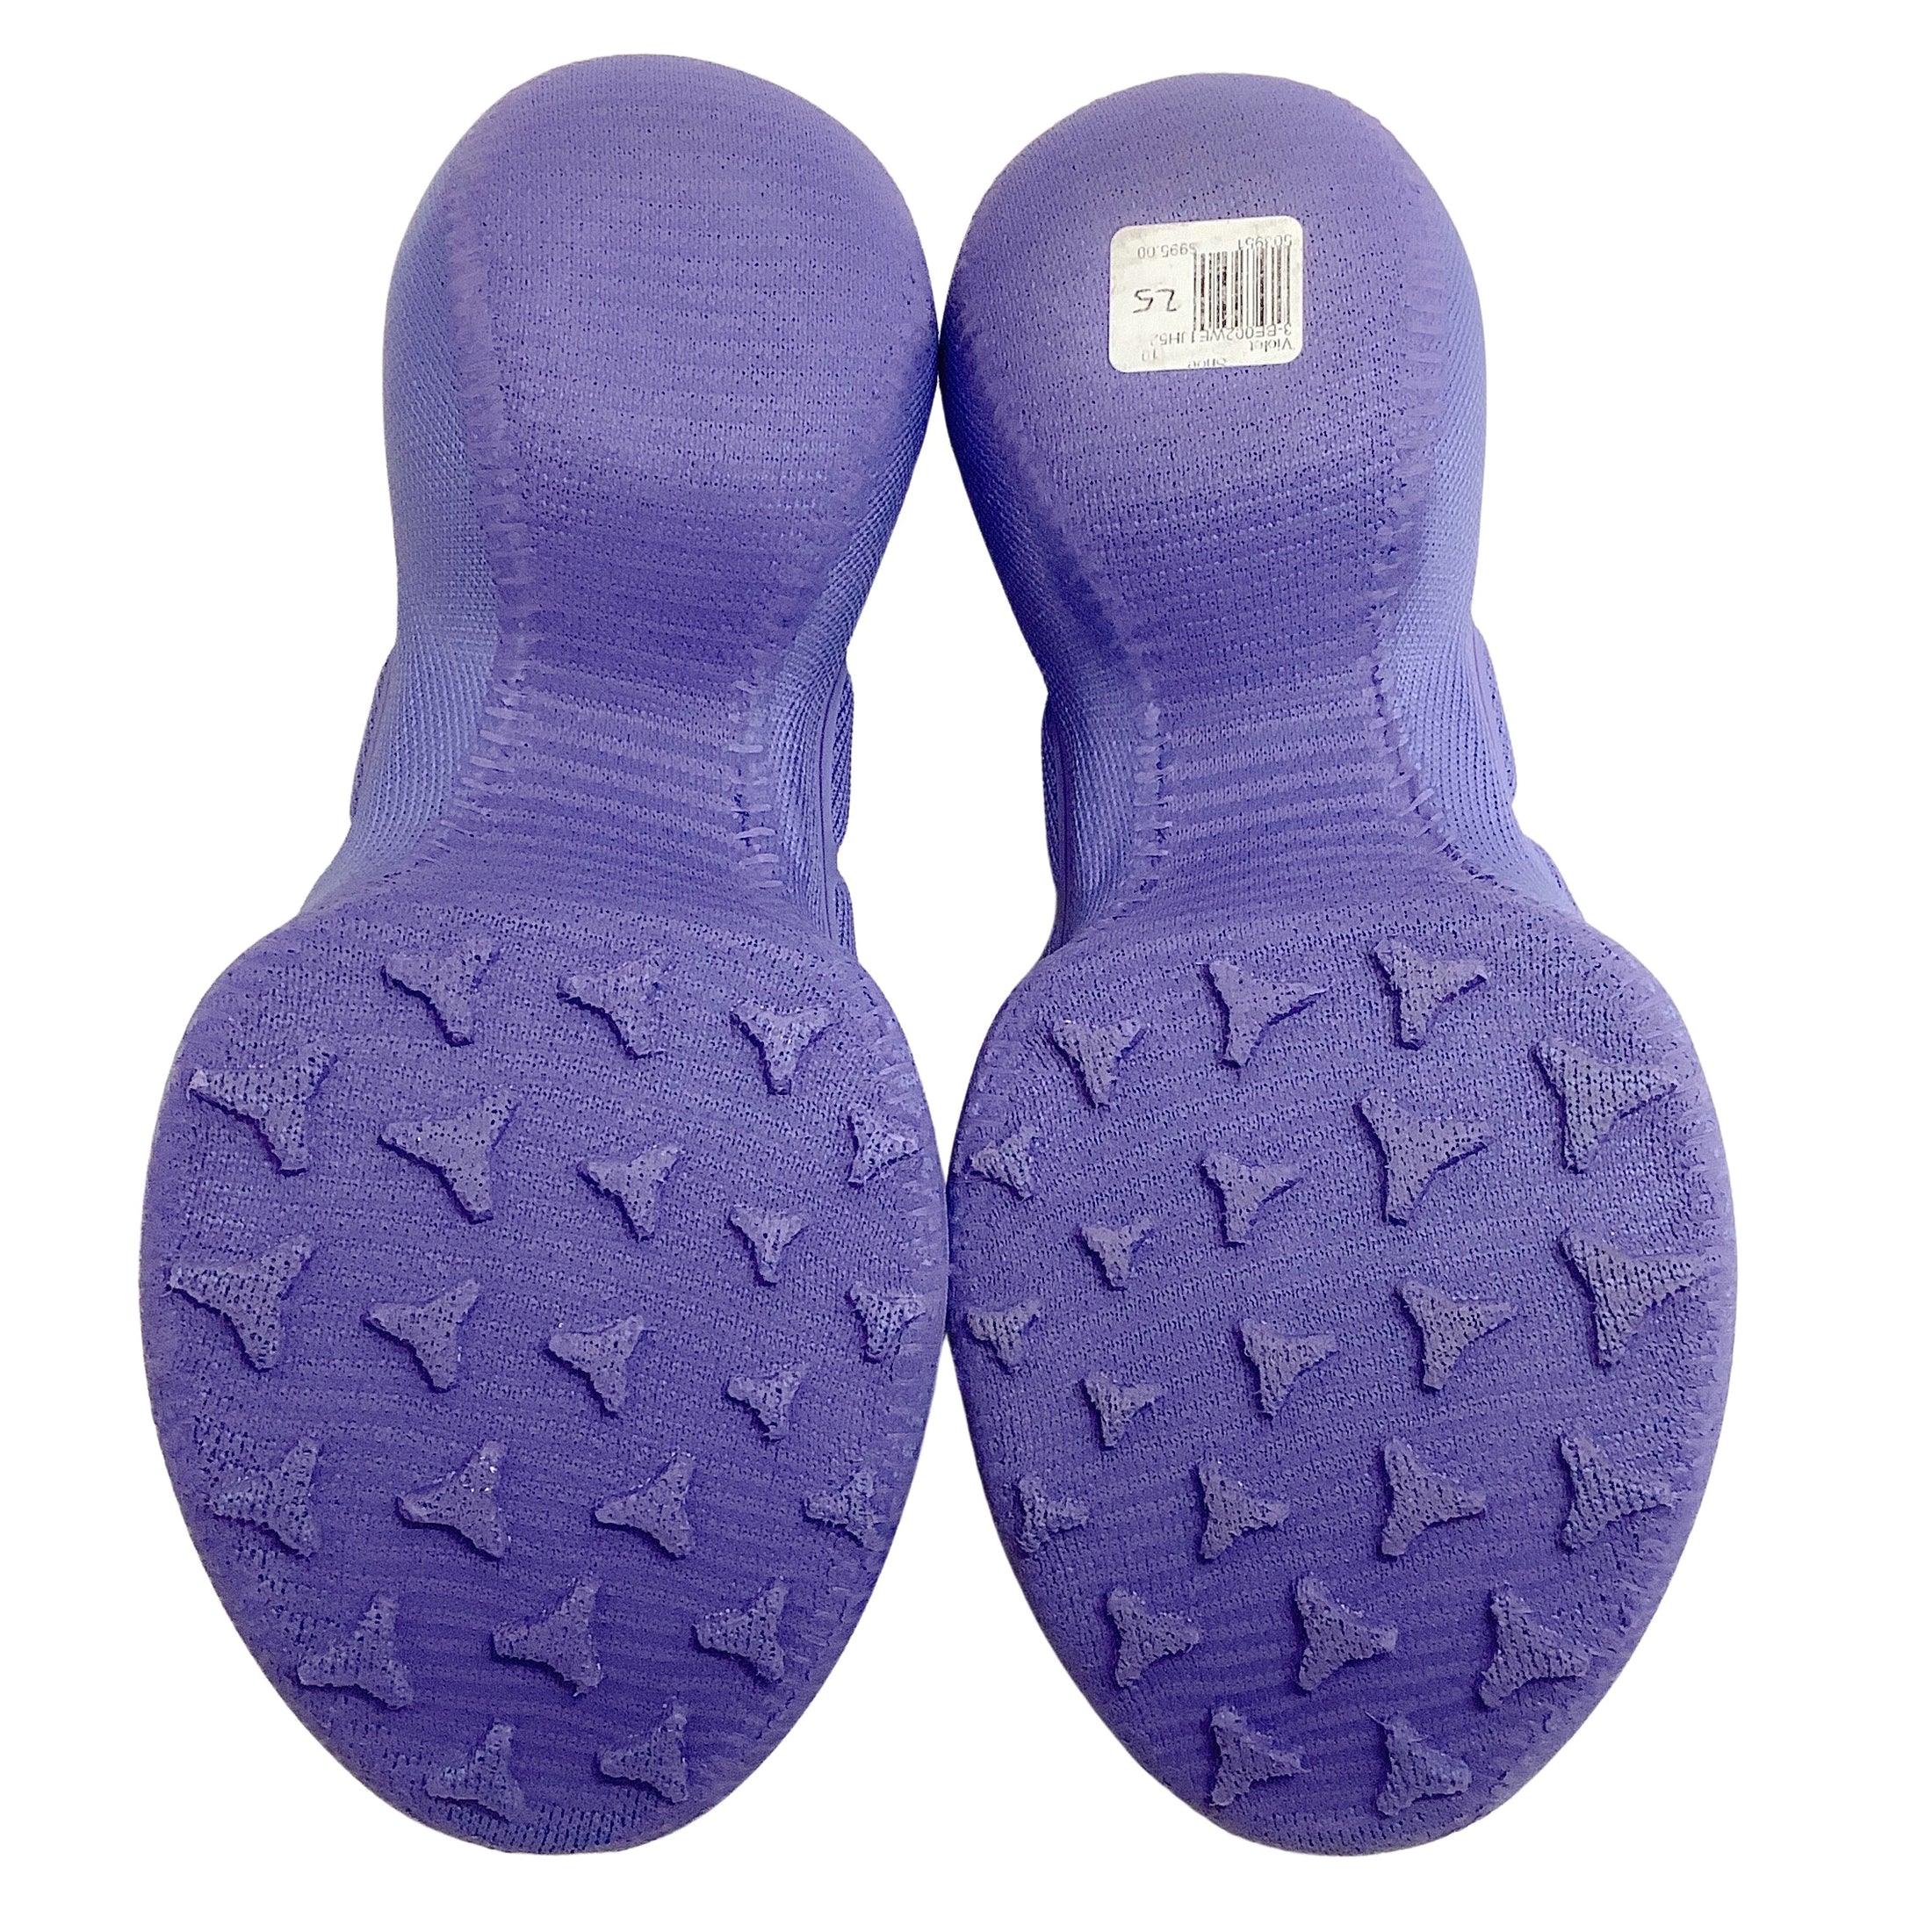 Givenchy Ultraviolet TK-360 Slip On Sock Sneakers